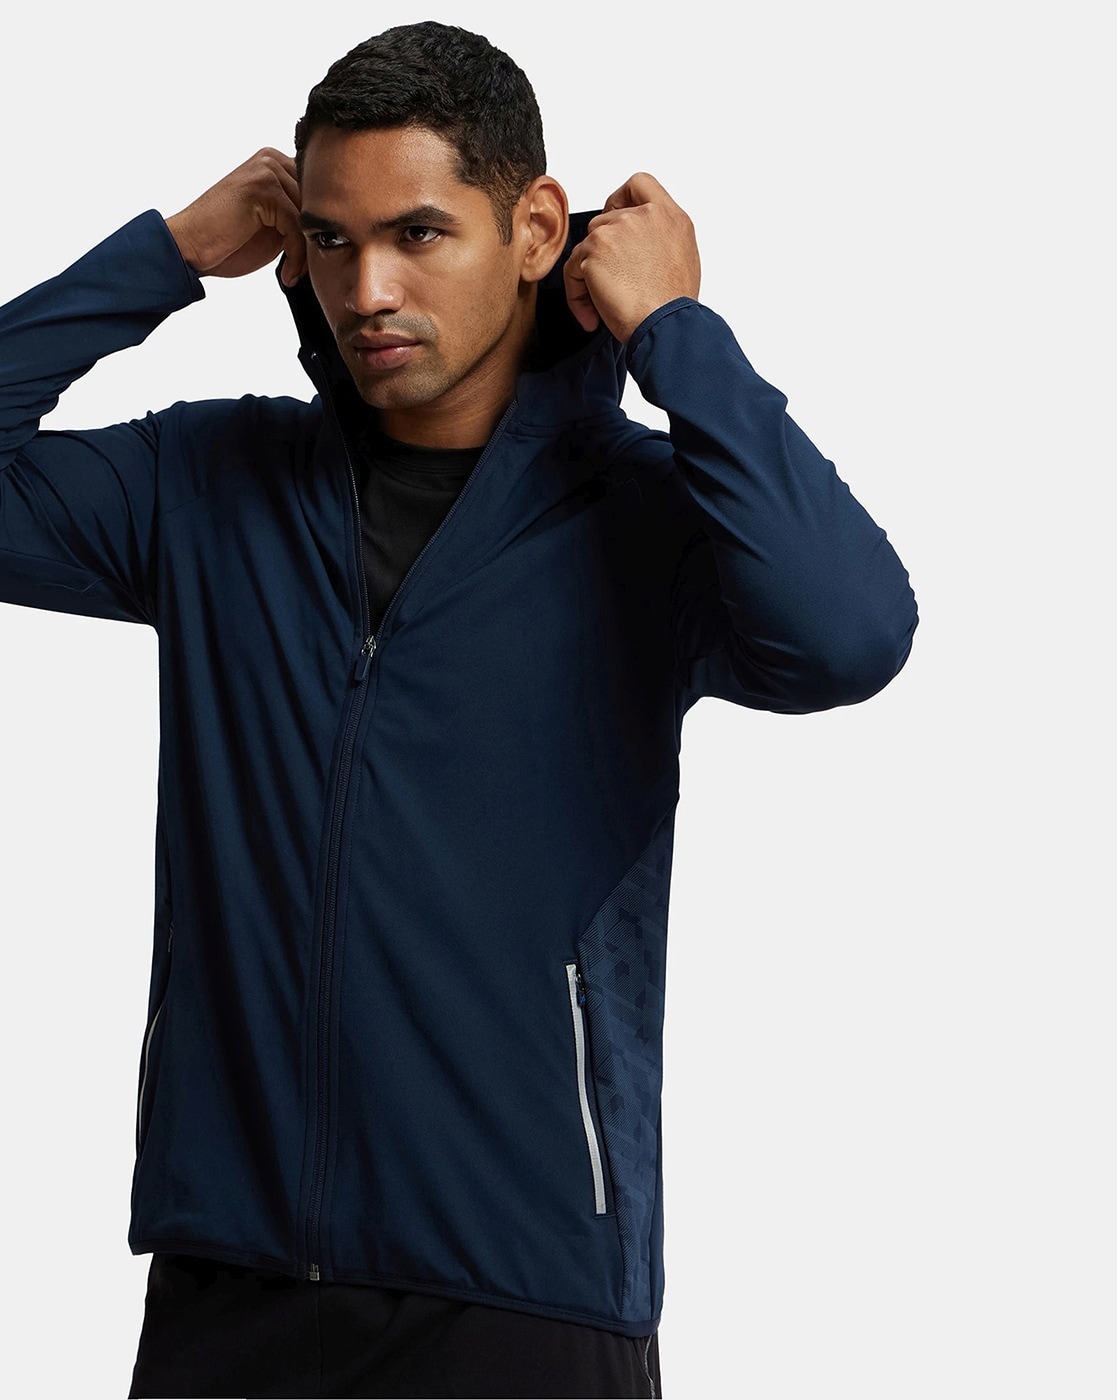 Buy Navy Jackets & Coats for Men by JOCKEY Online